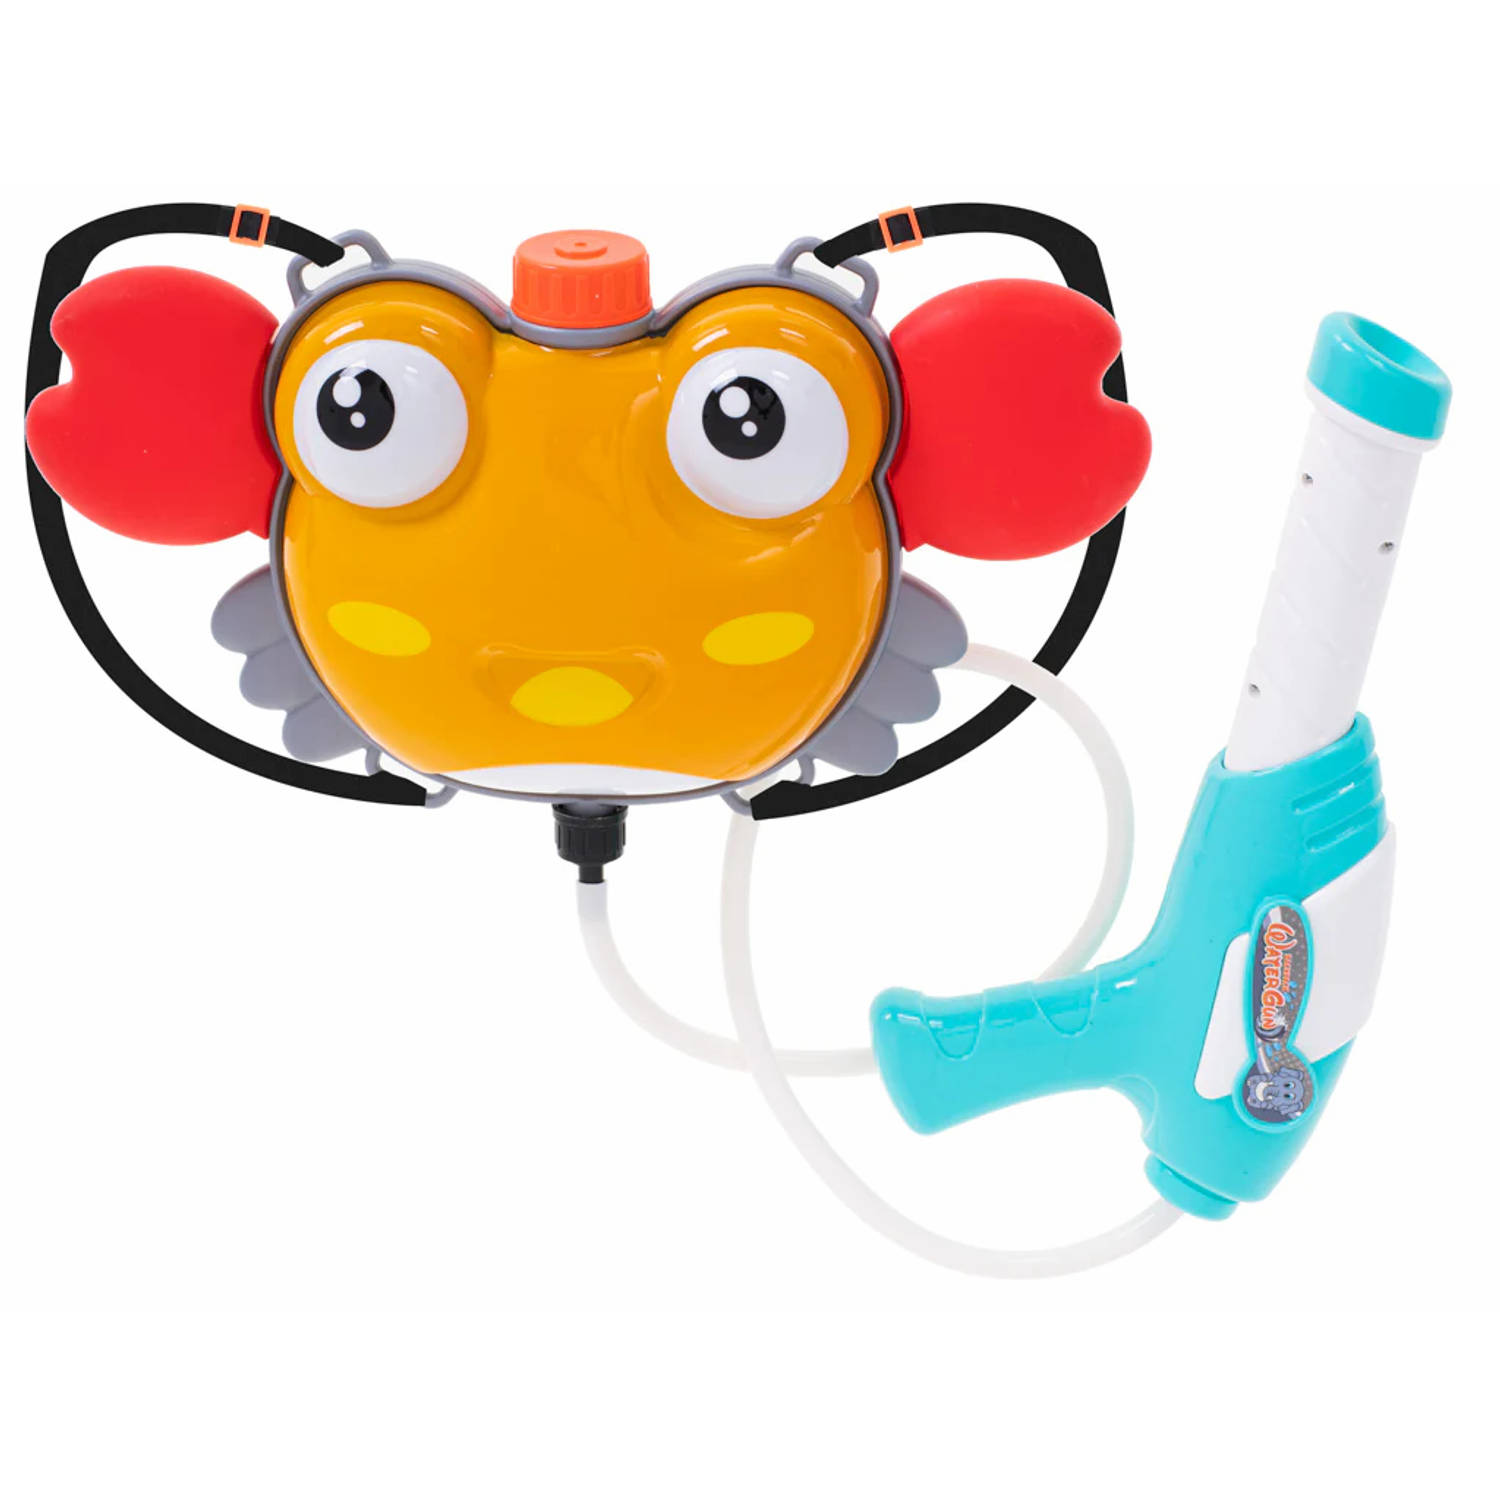 Rugzak waterpistool oranje krab 1L Buitenspeelgoed Backpack Watergun Supersoaker Voor de kleine kind